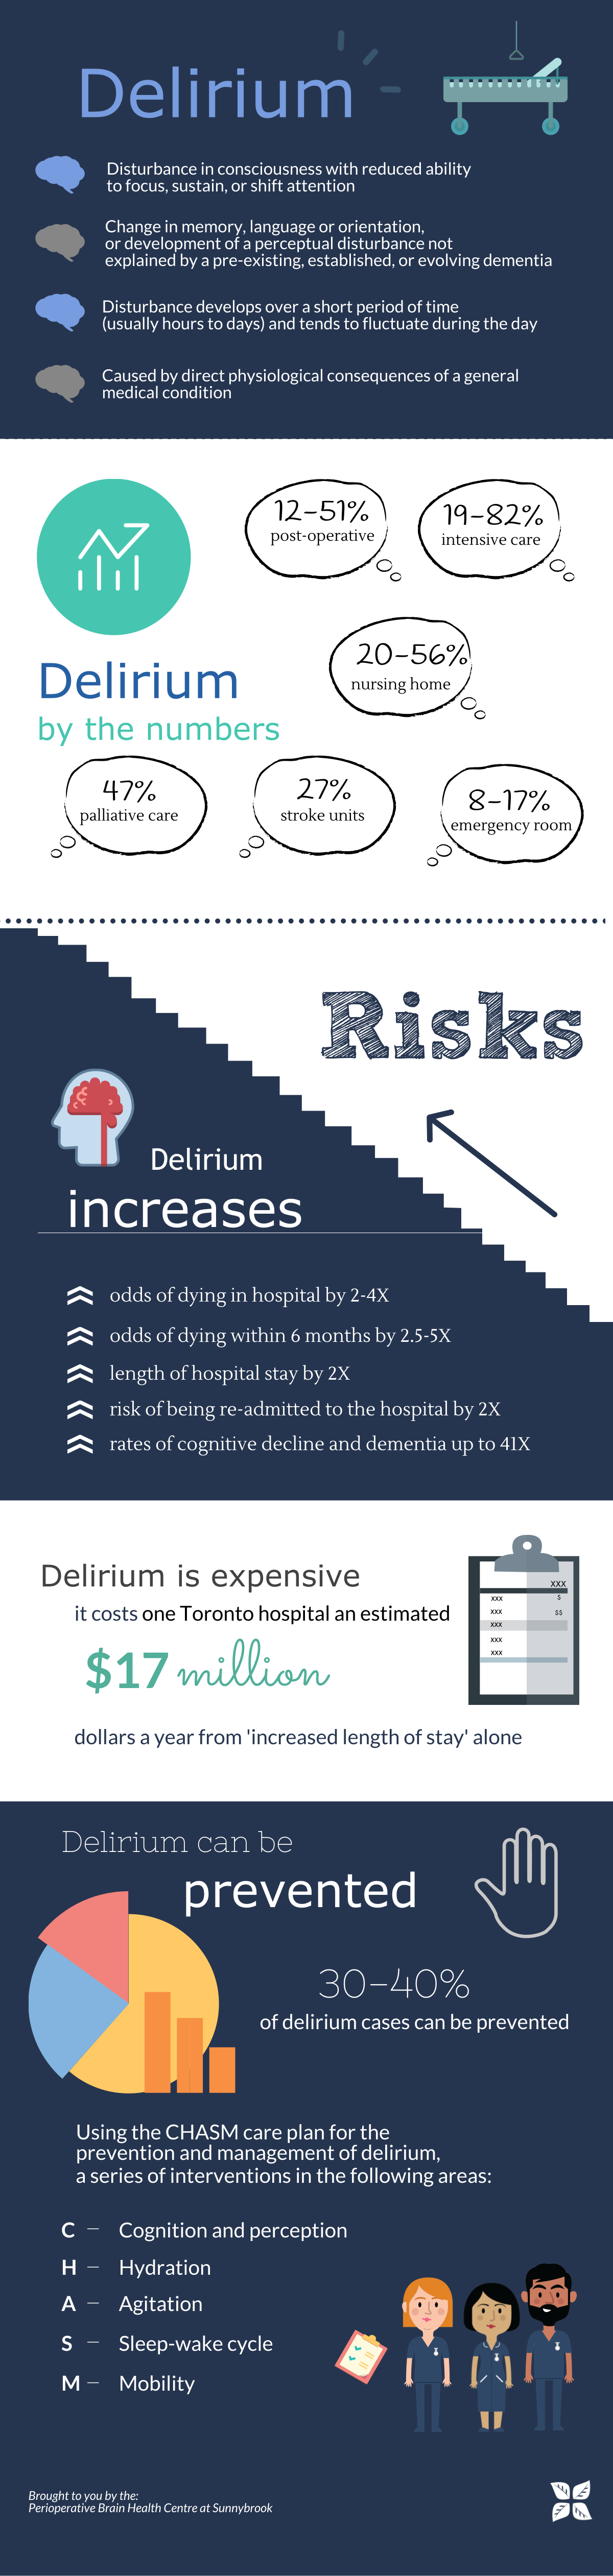 Delirium infographic - read the text below